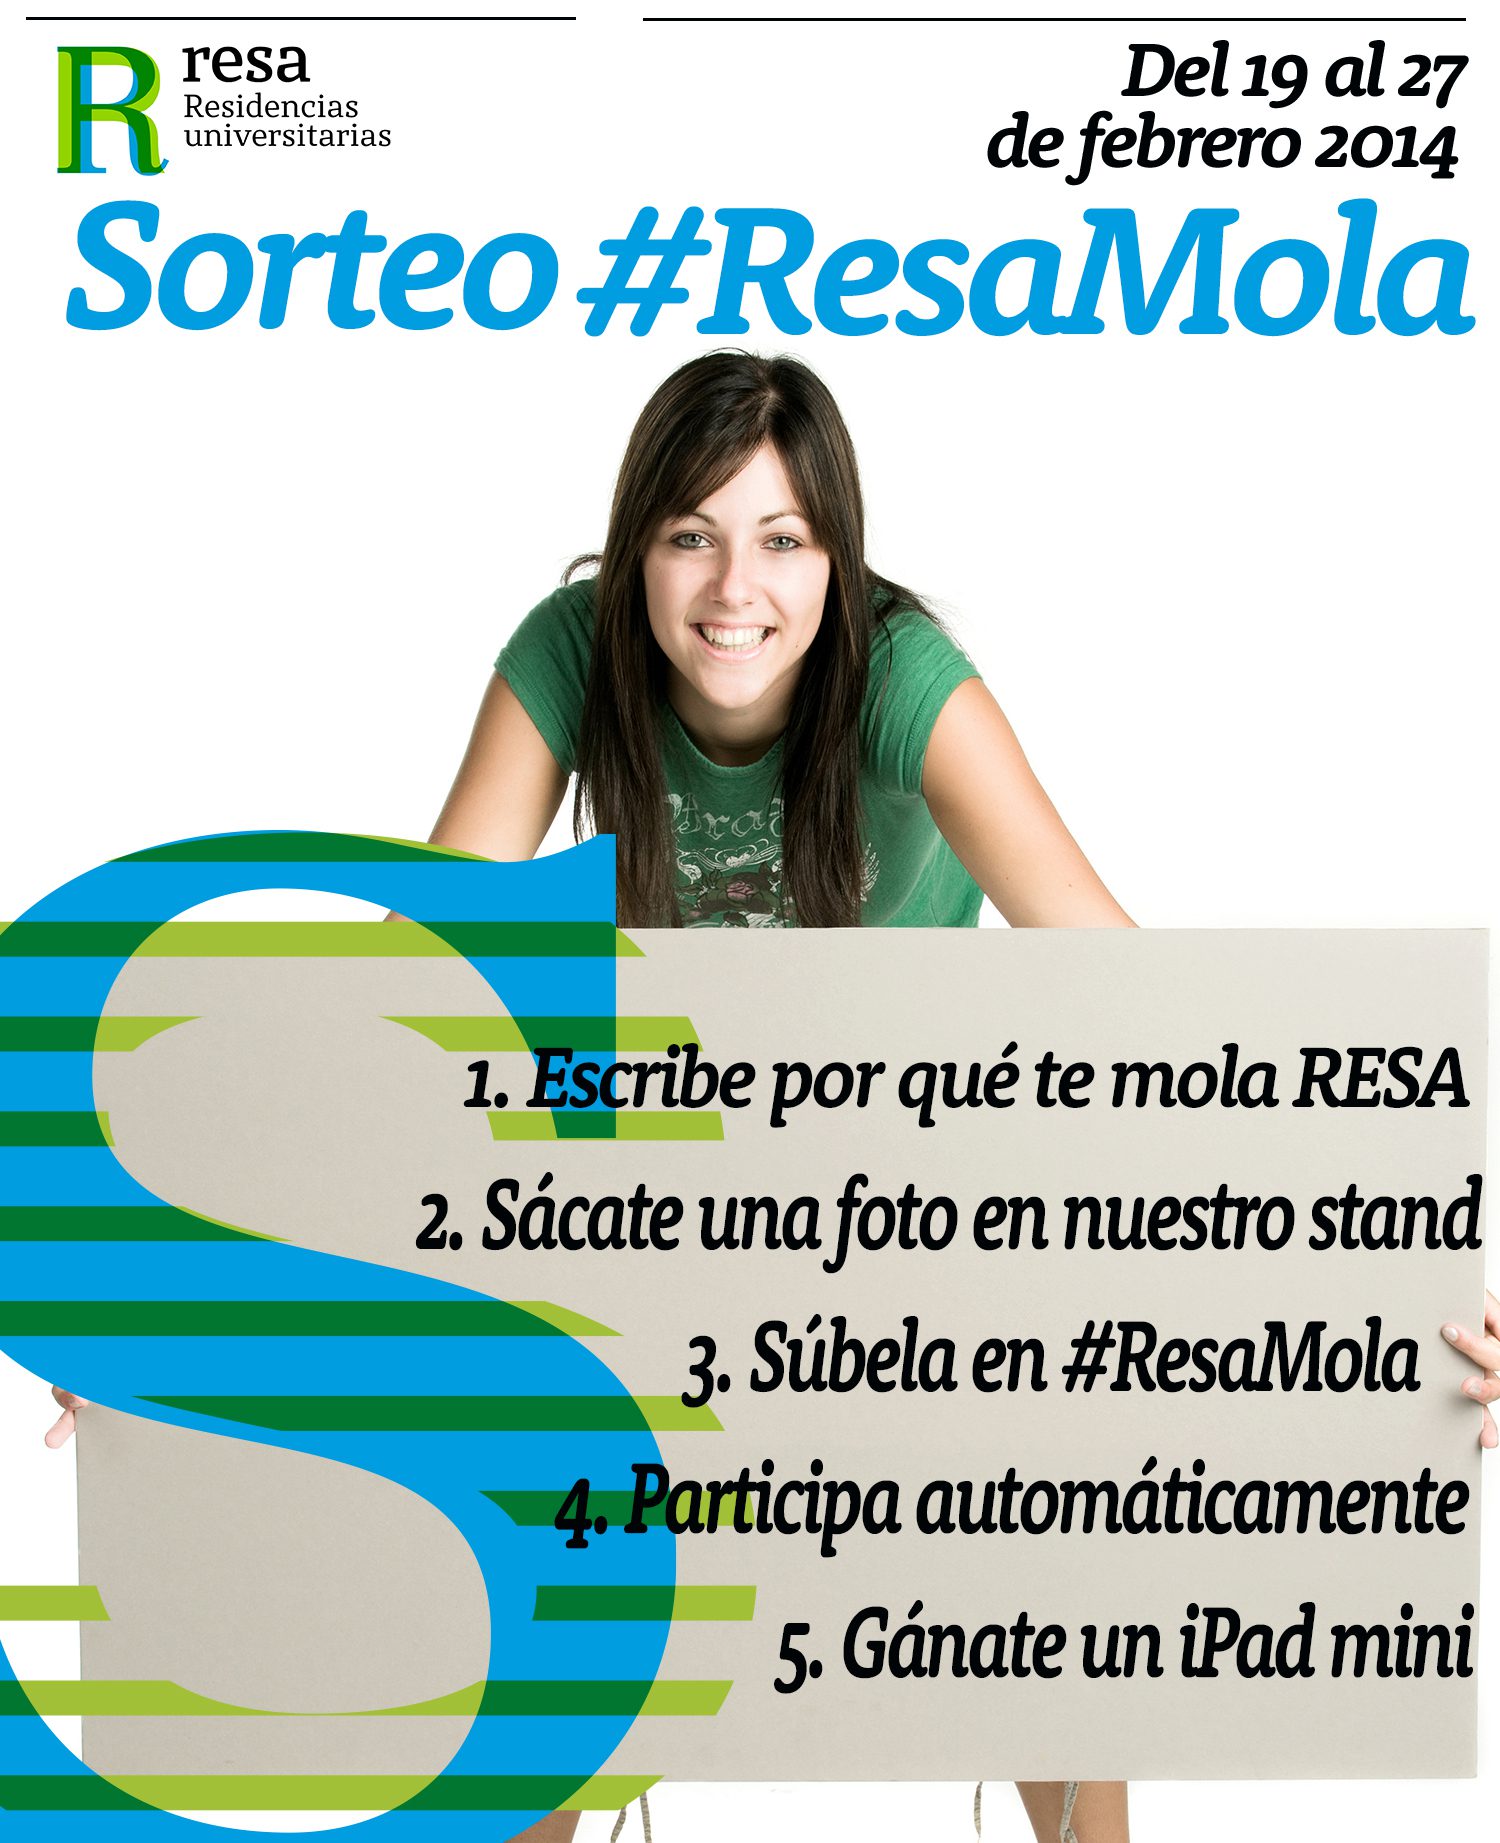 Sorteo #ResaMola. Bases Legales